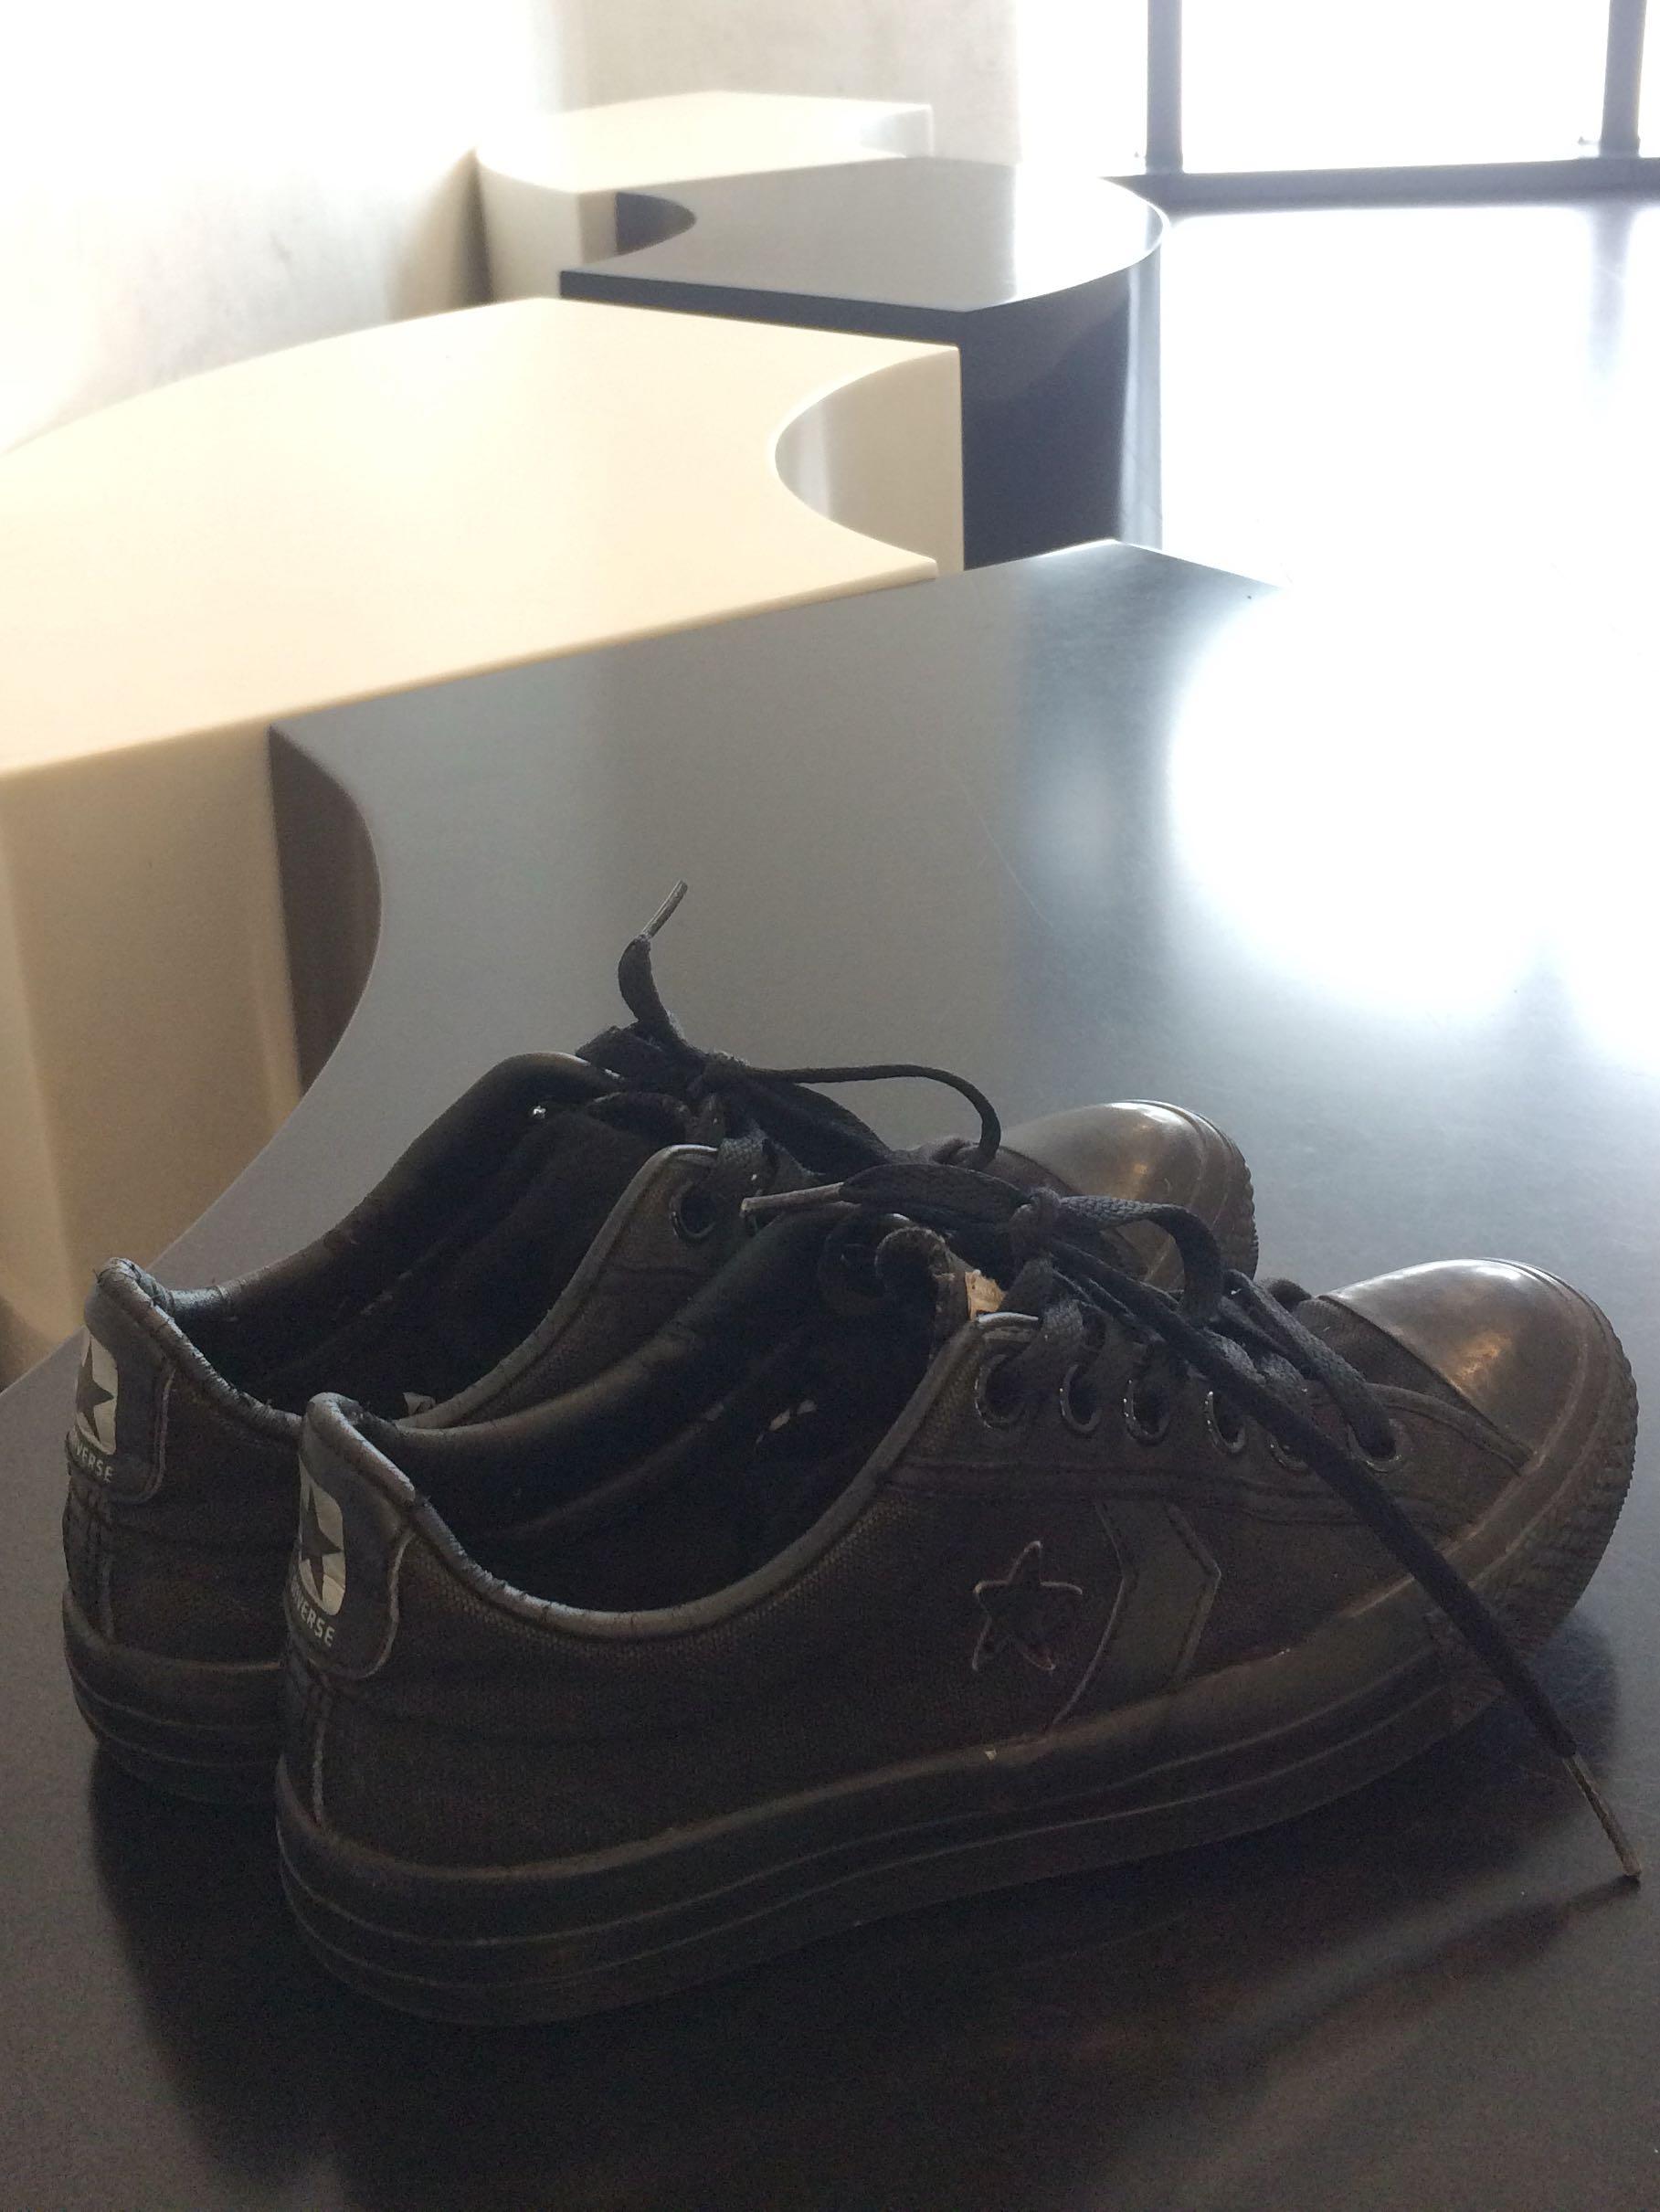 all black converse size 5.5